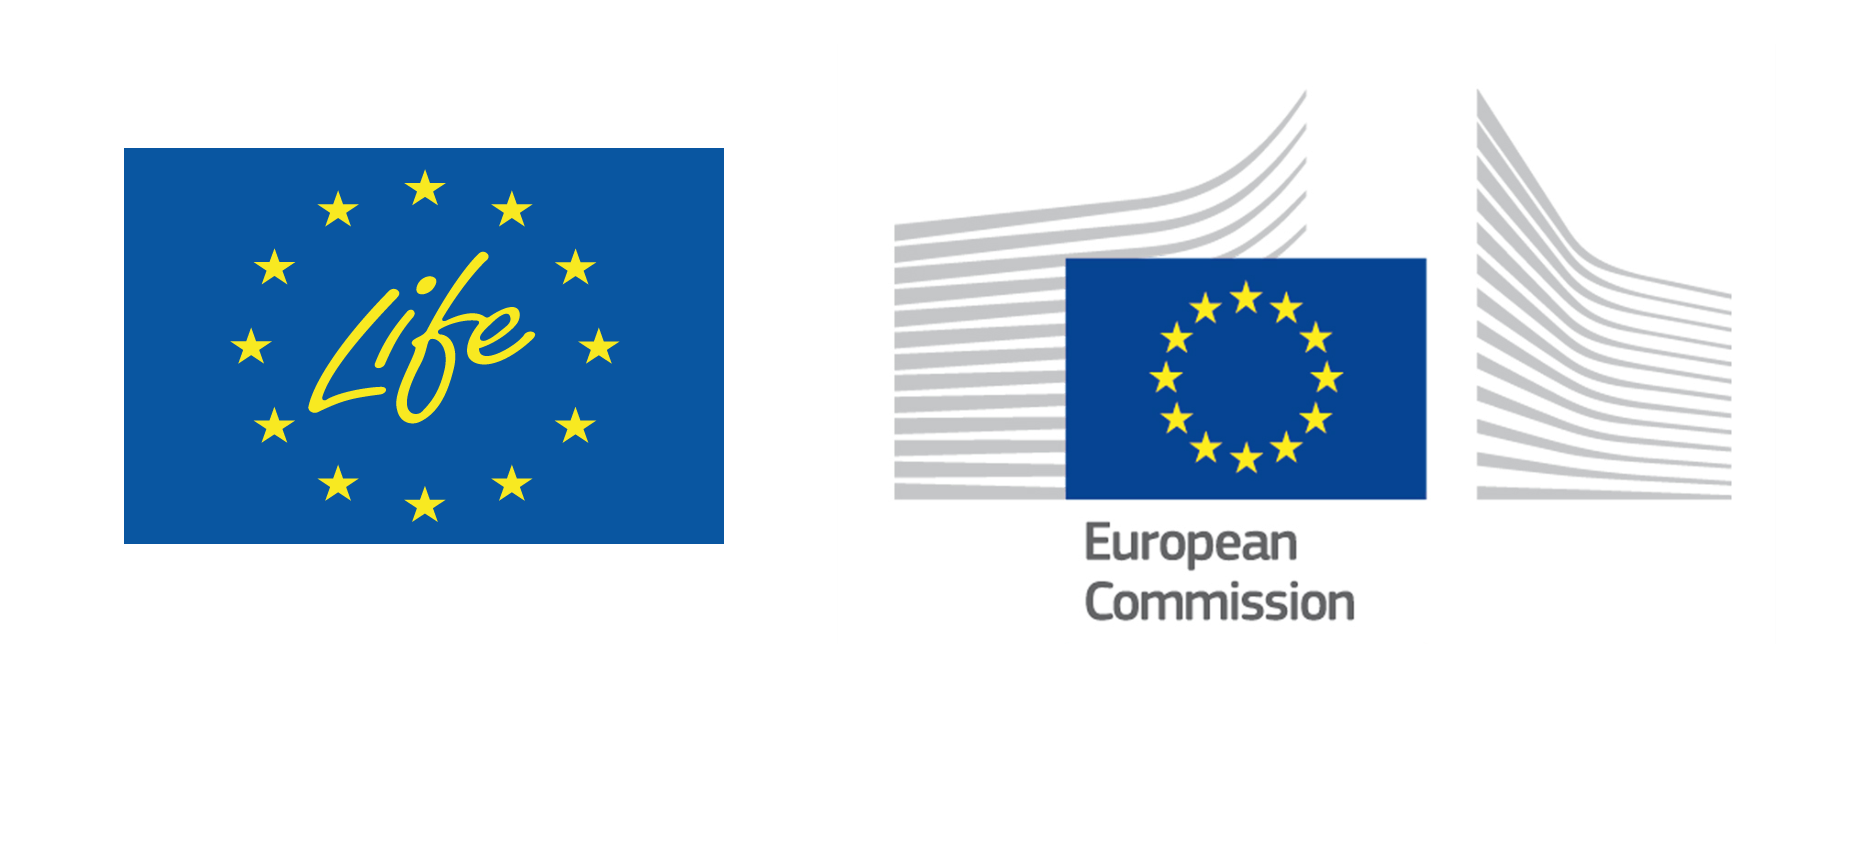 Life - European Commission Logo